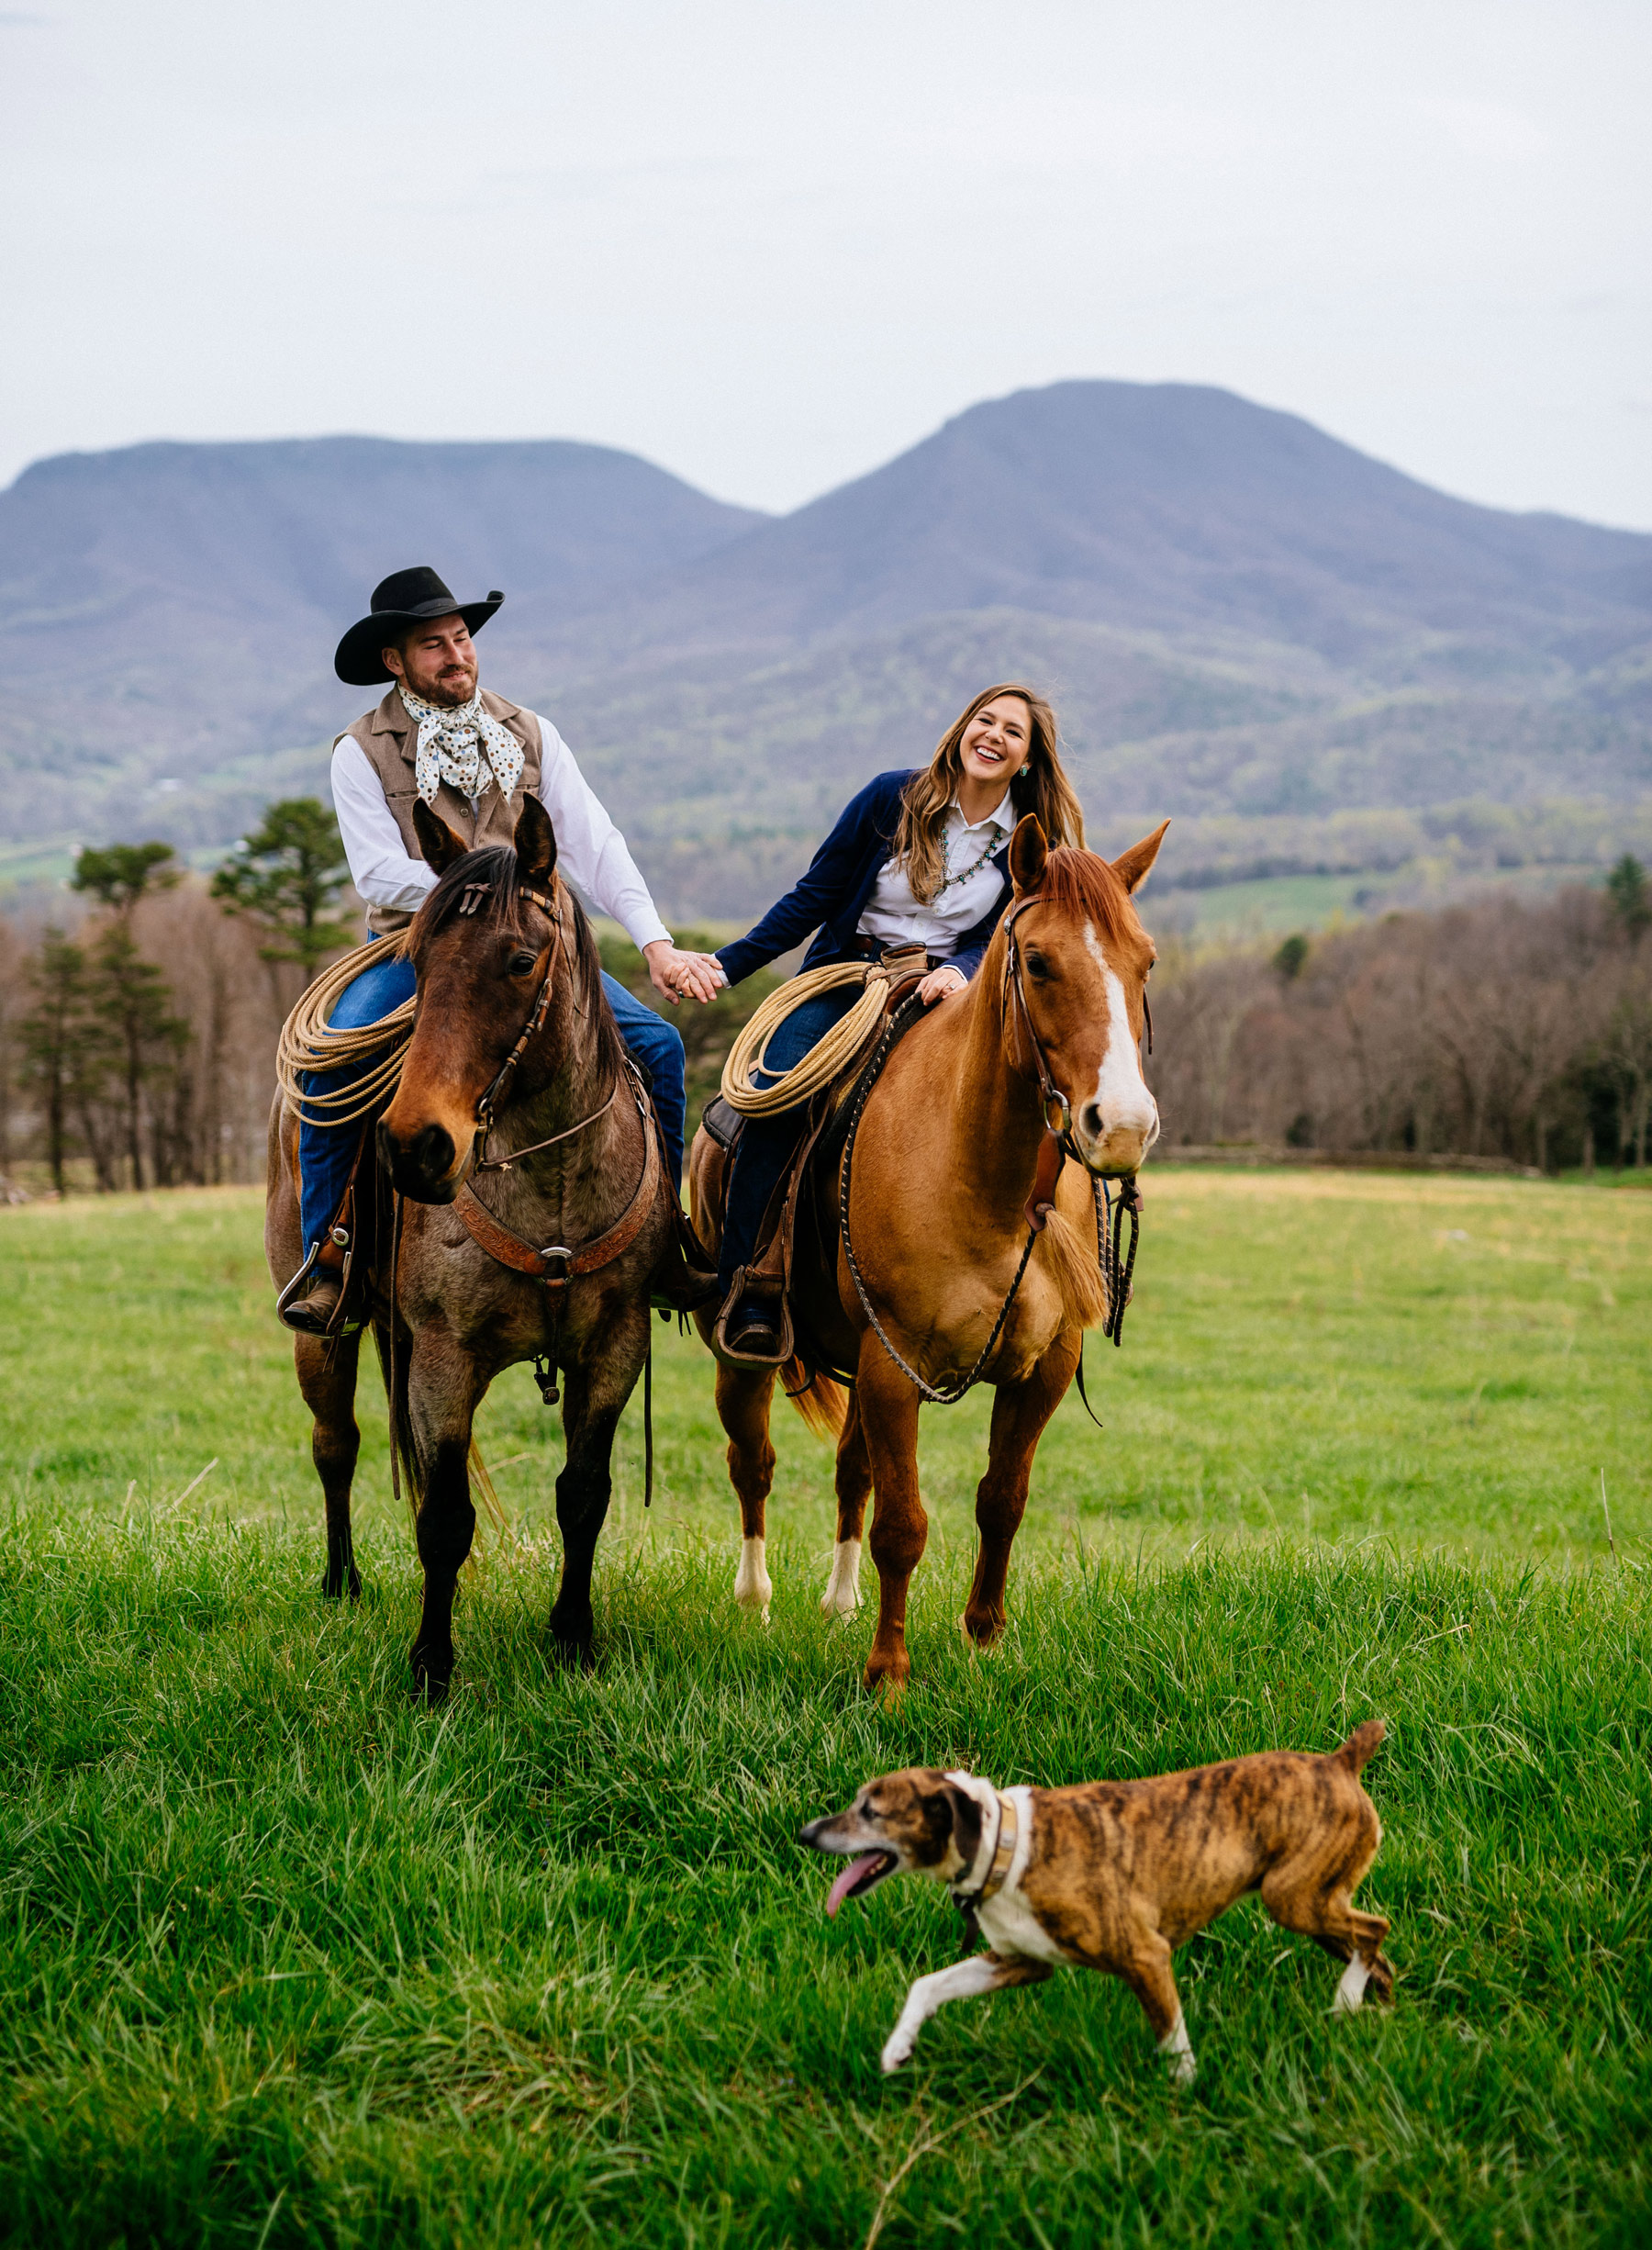 lexington virginia engagement session with horses